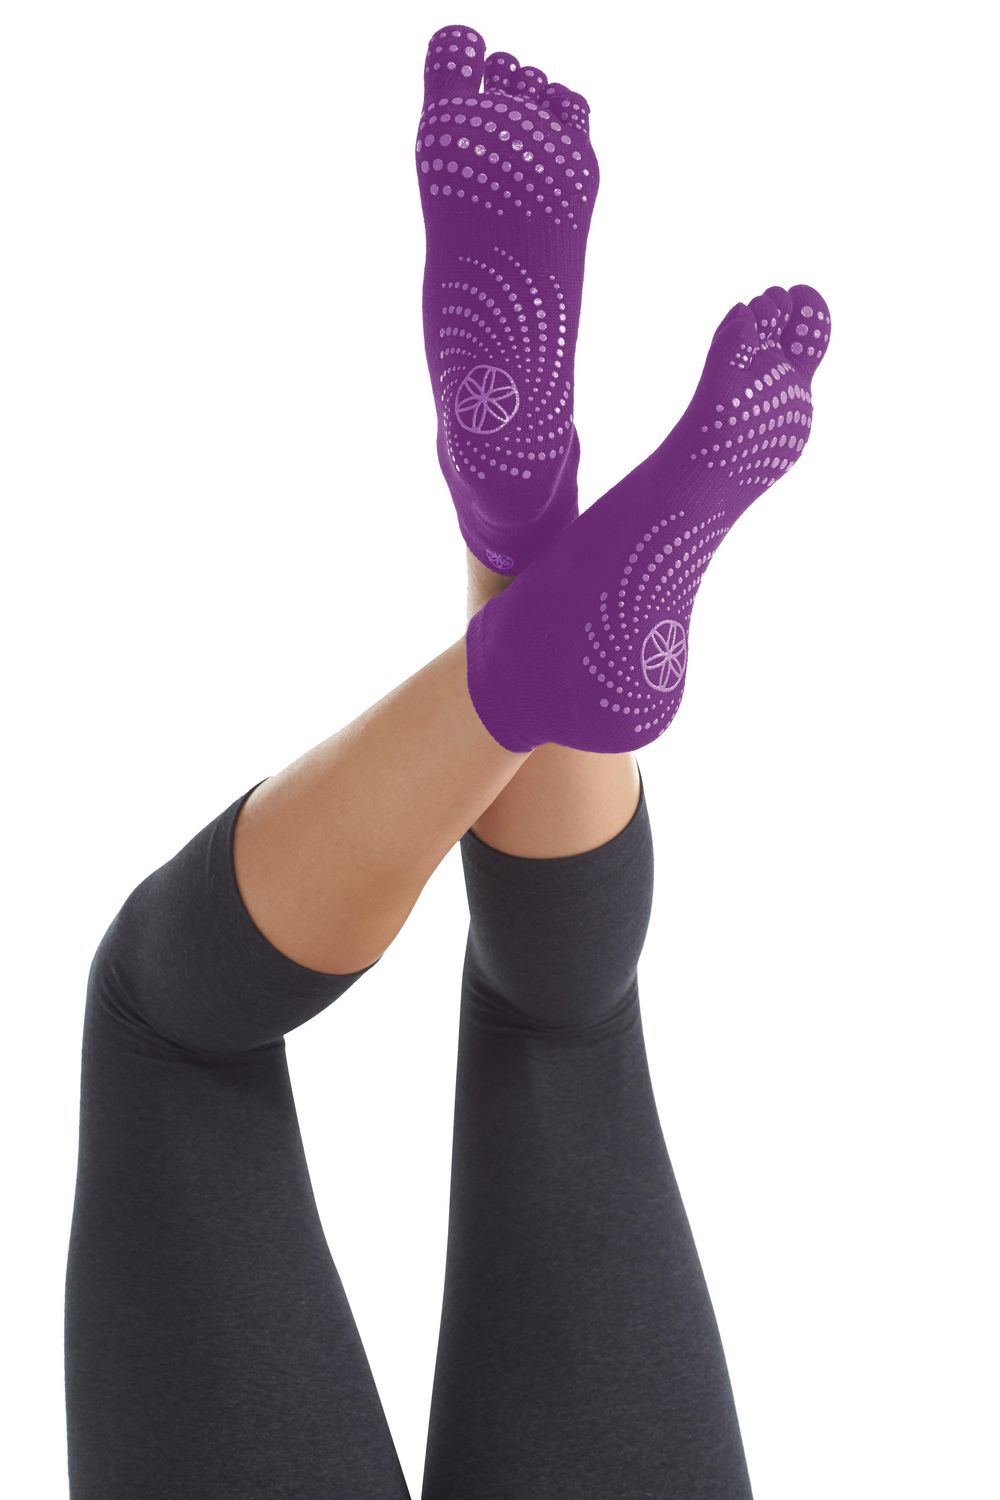 Gaiam Grippy Yoga Socks - S/M - Sparkling Grape 